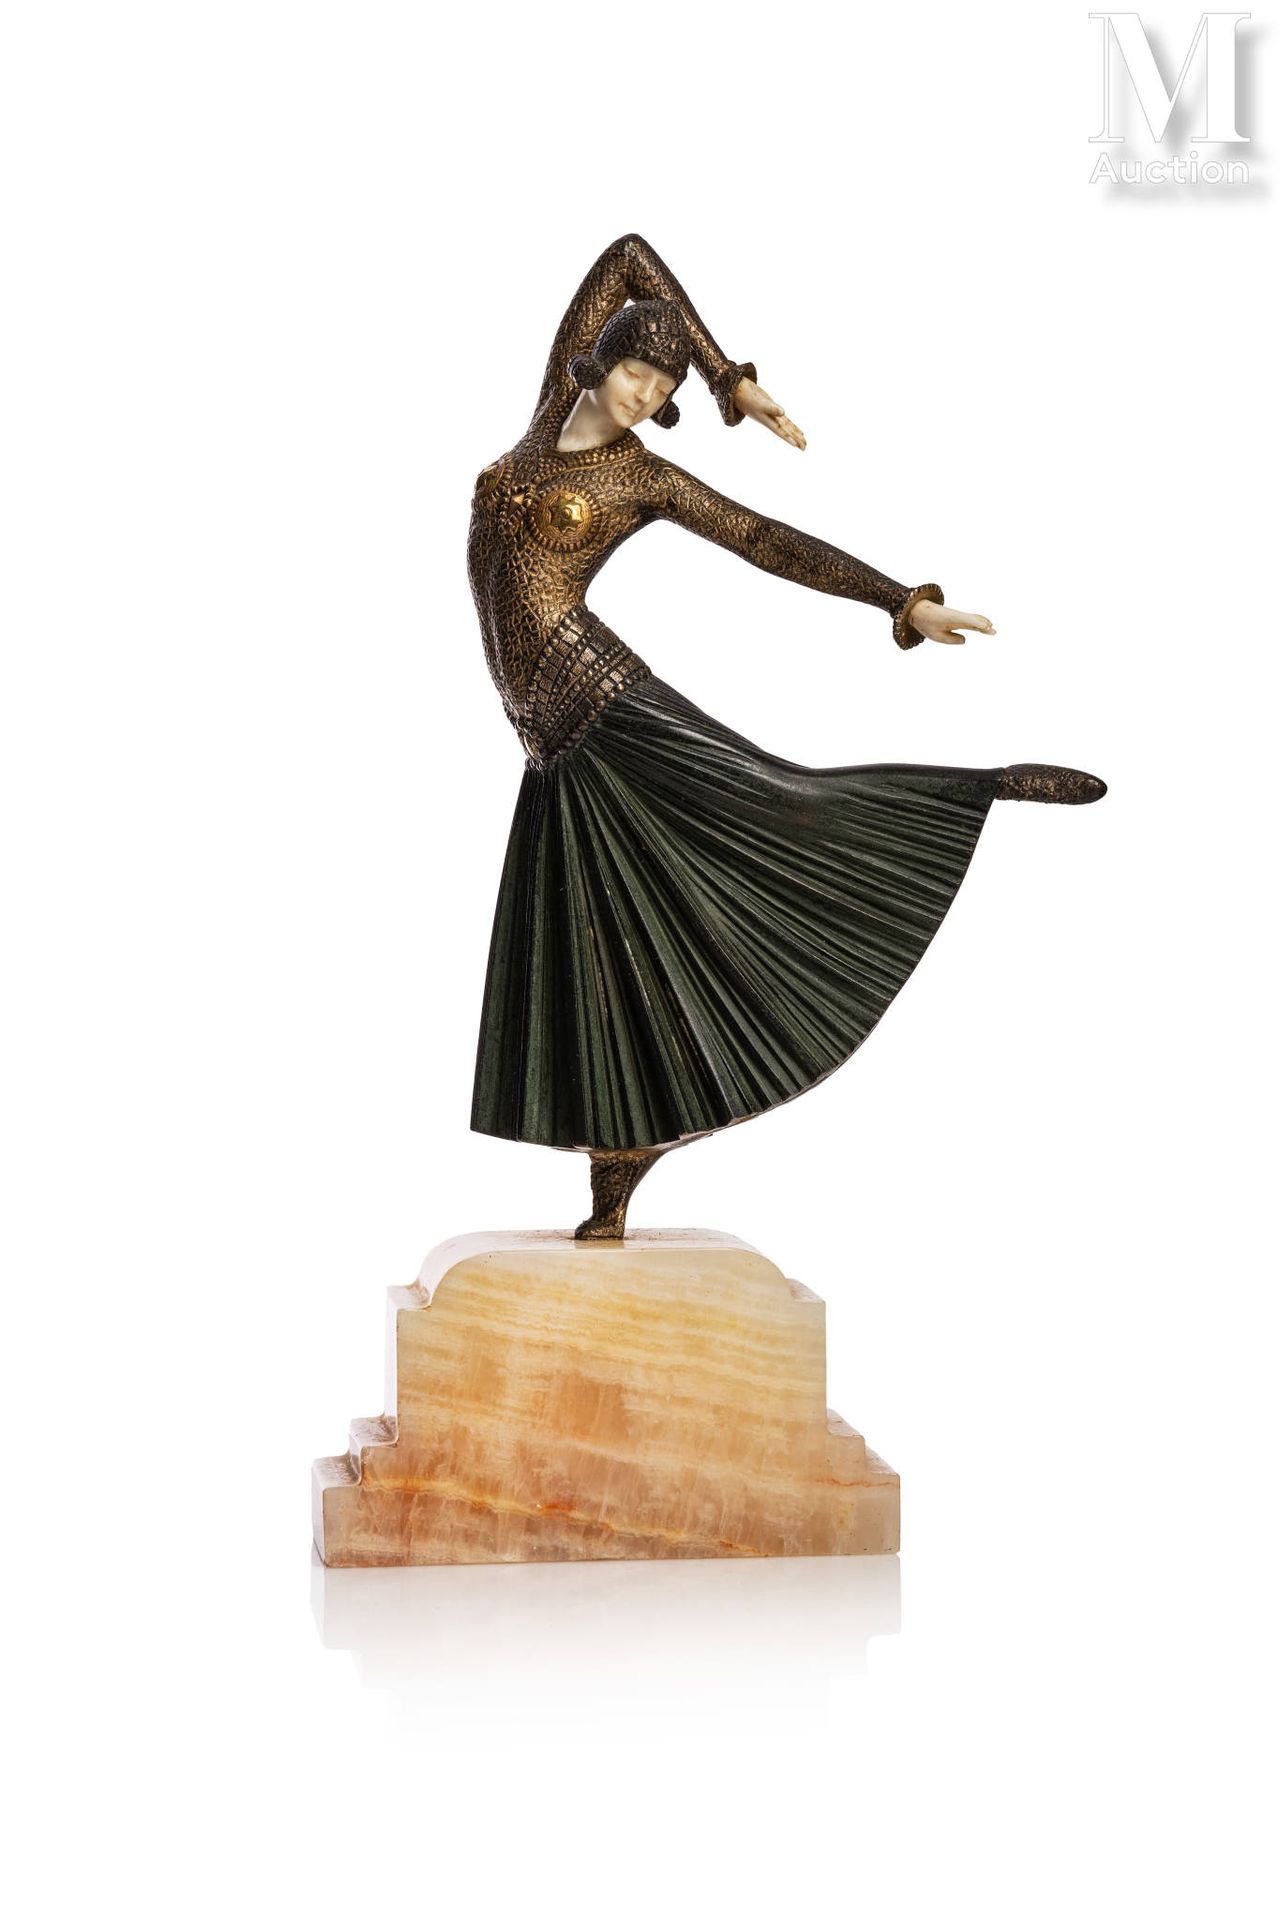 Demeter Haralamb CHIPARUS (1886-1947) "Ayouta"



Chryselephantine-Skulptur aus &hellip;